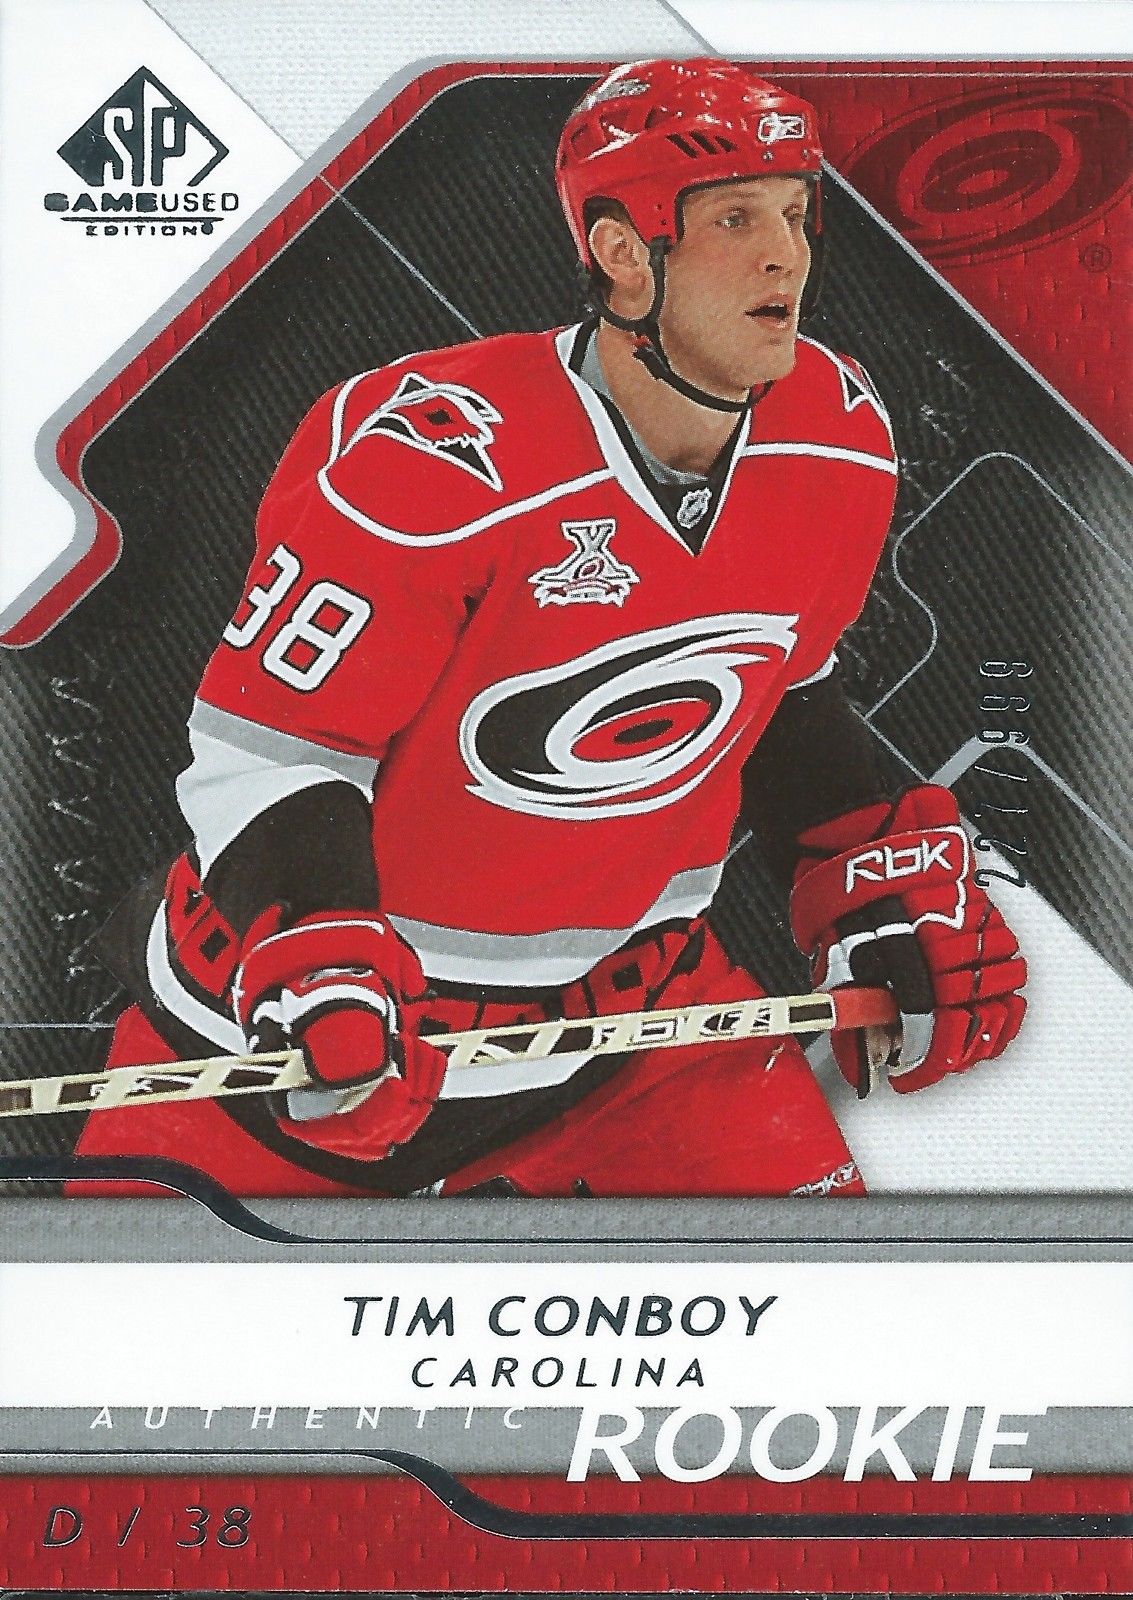  2008-09 SP Game Used TIM CONBOY Rookie /999 Upper Deck RC NHL 00992  Image 1